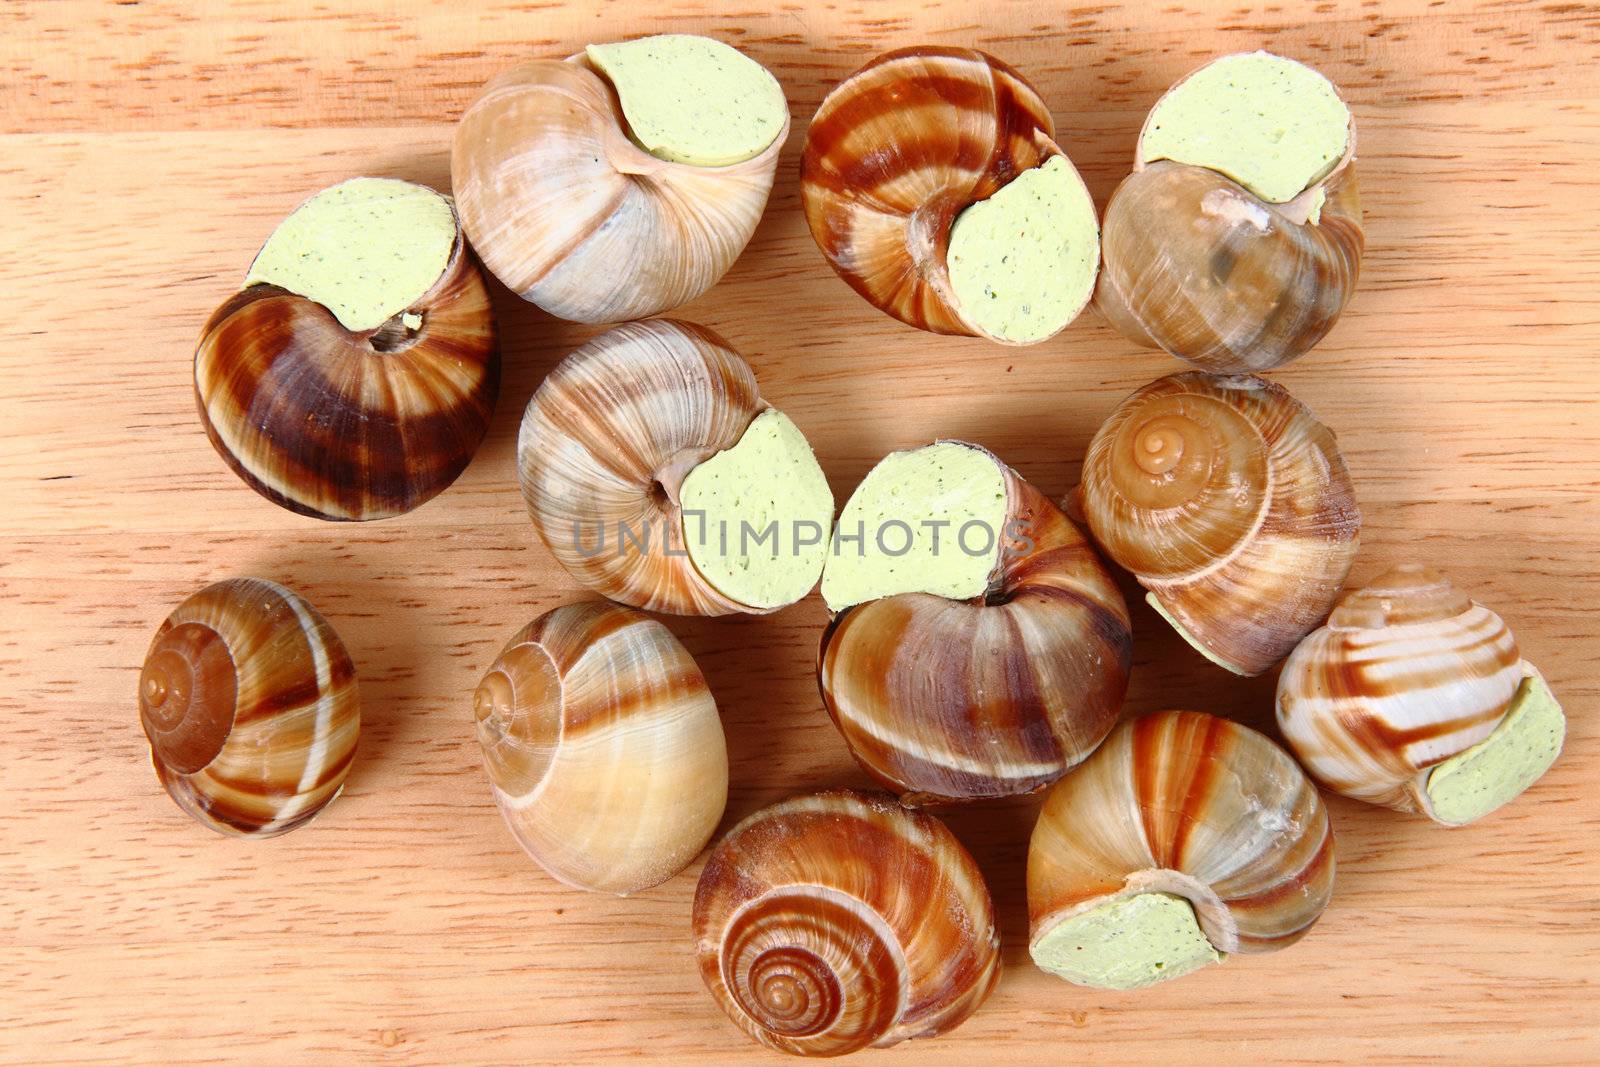 snails - french gourmet food by jonnysek